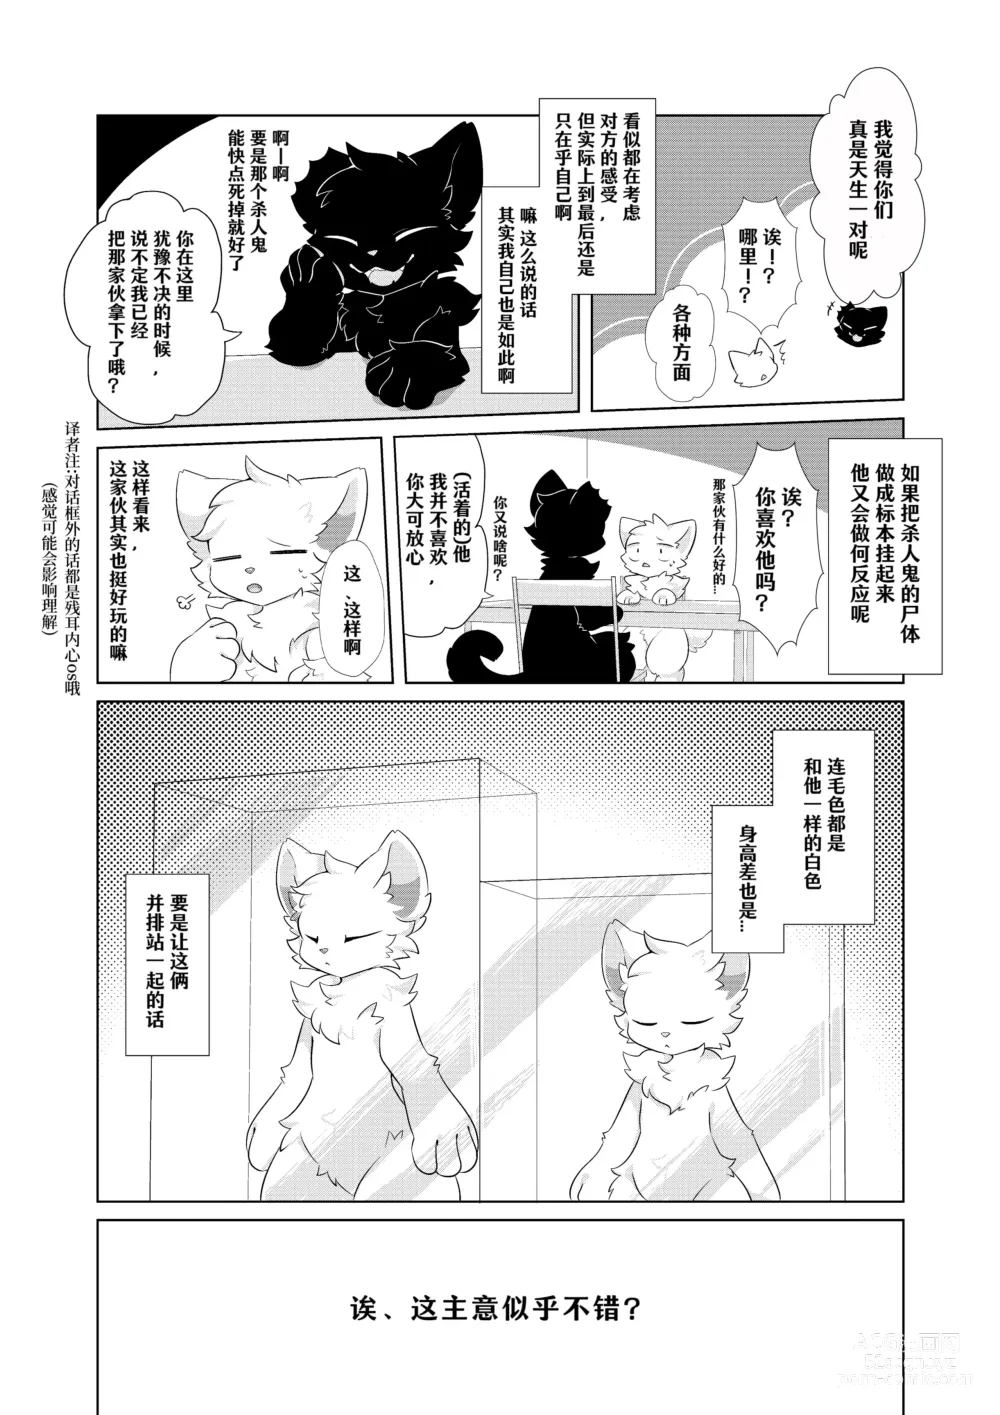 Page 36 of doujinshi 在生命长途中，与你携手同行！